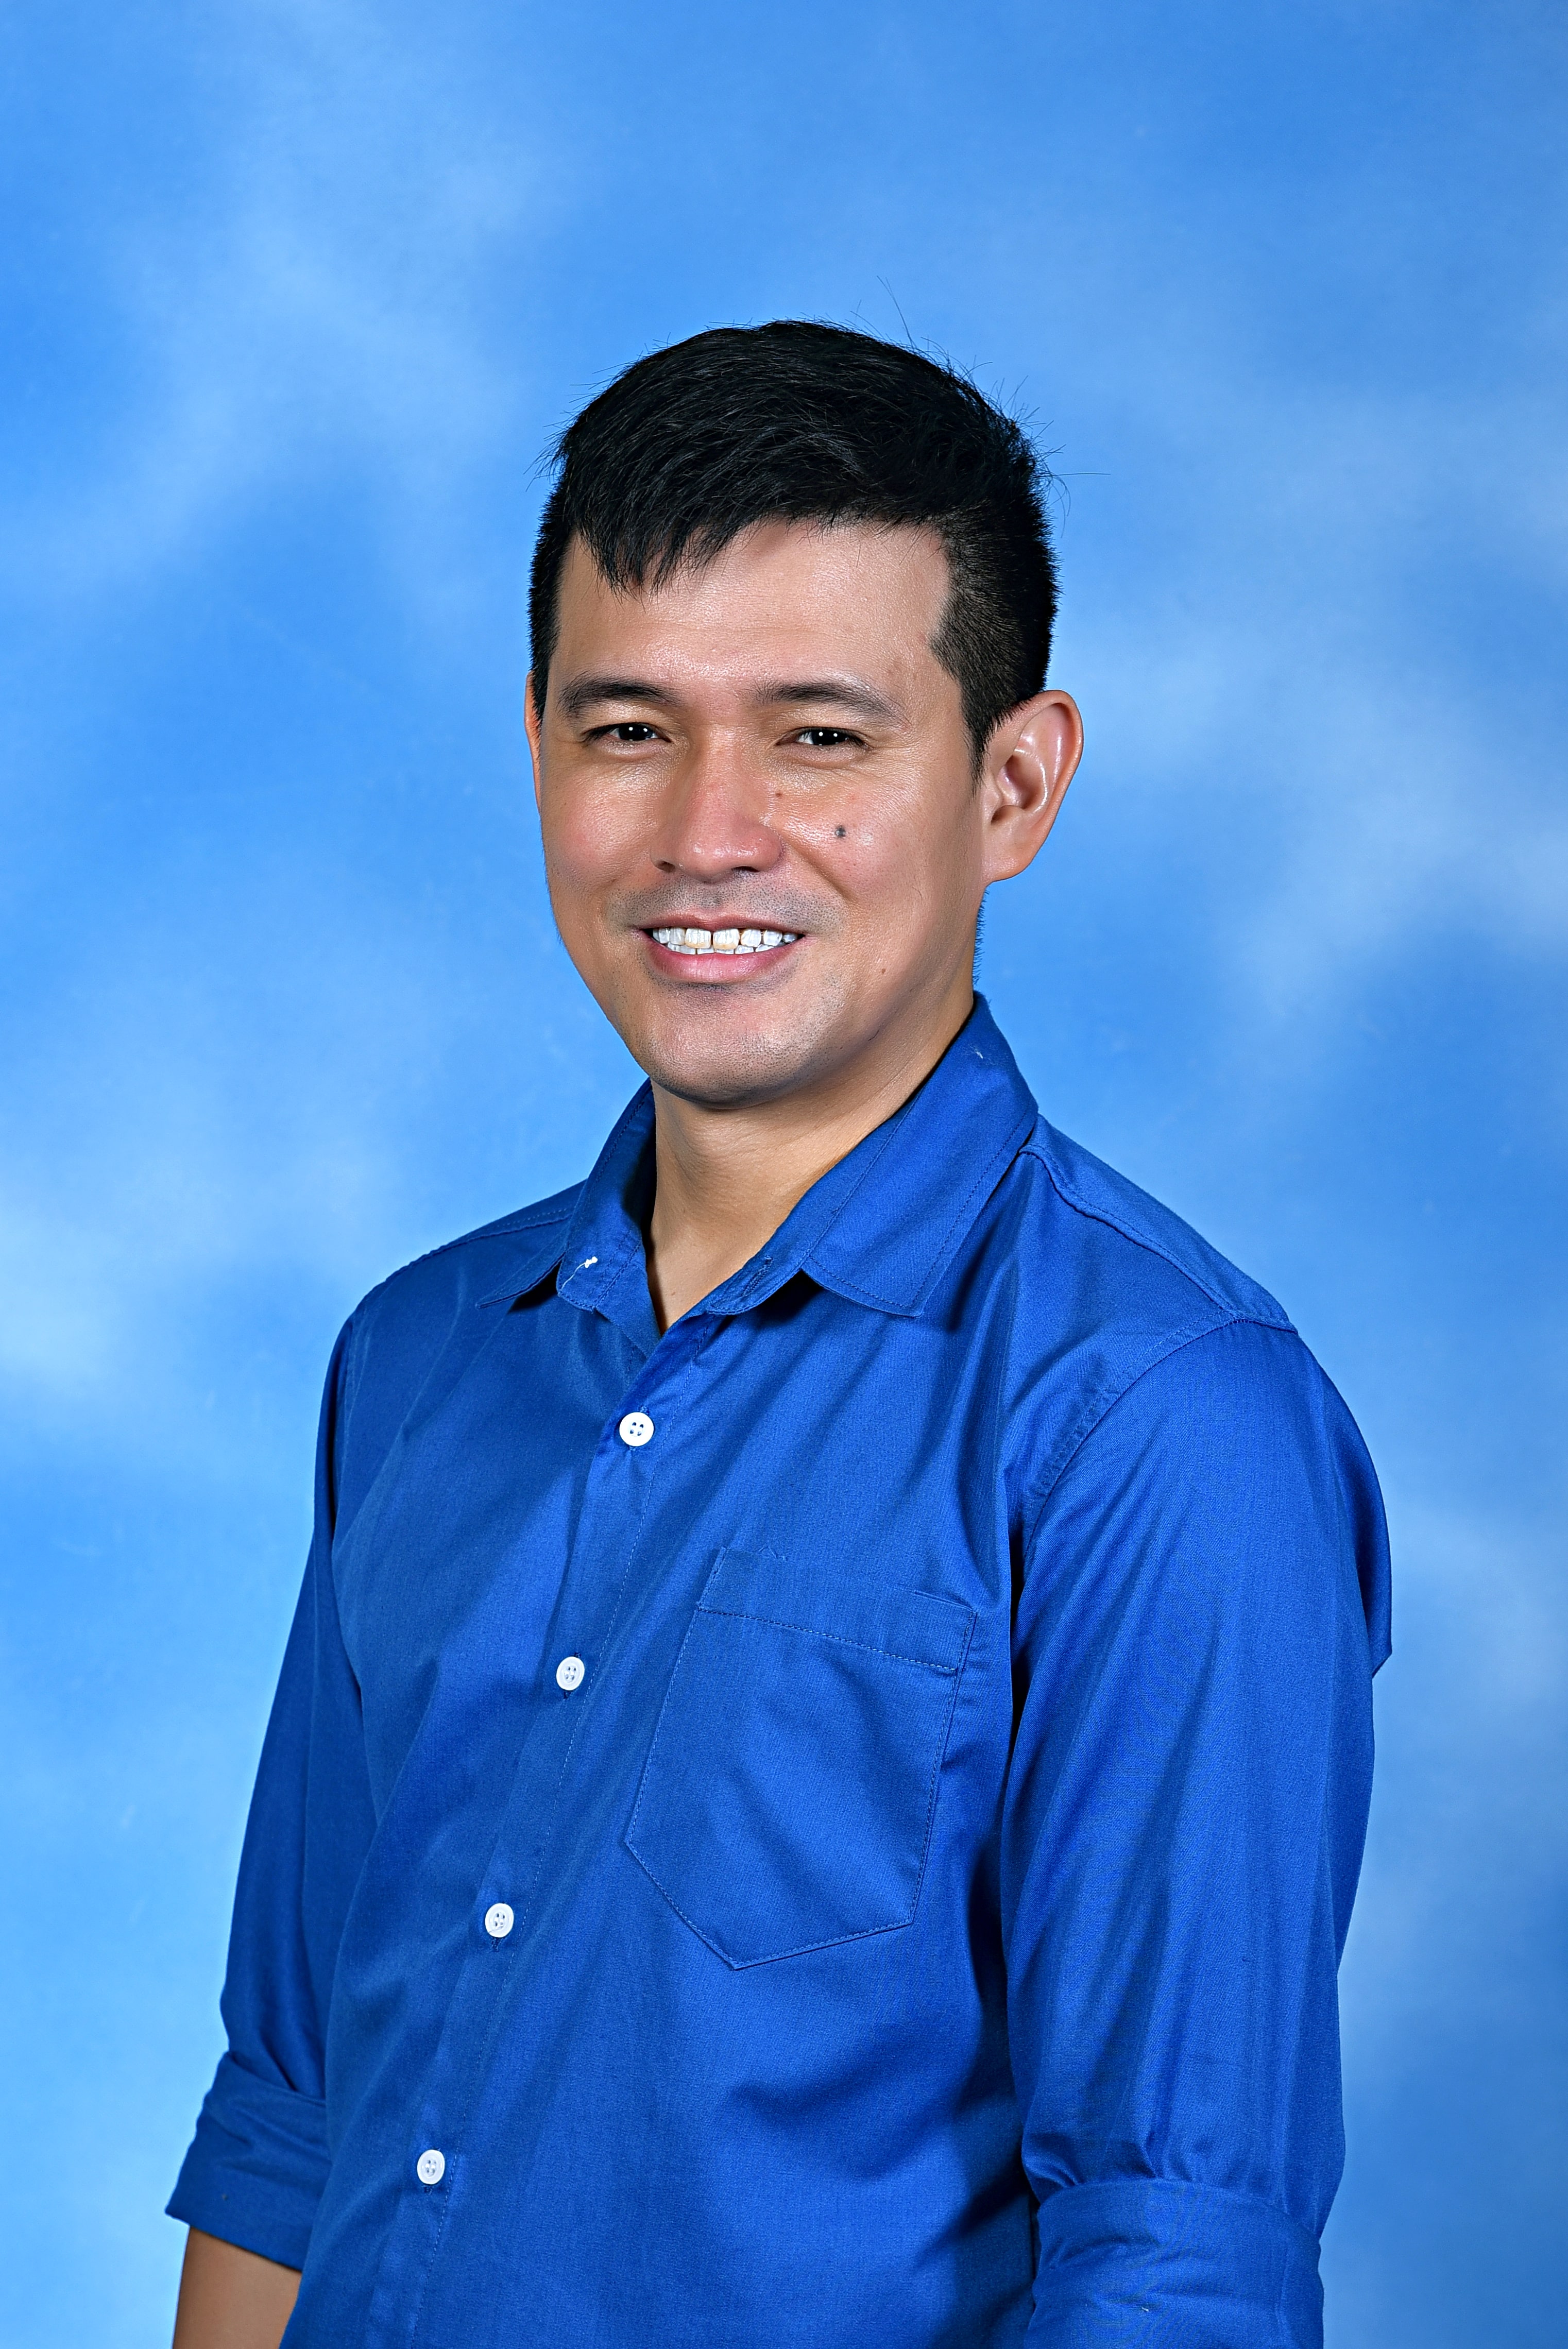 Mr. Khirby Villanueva